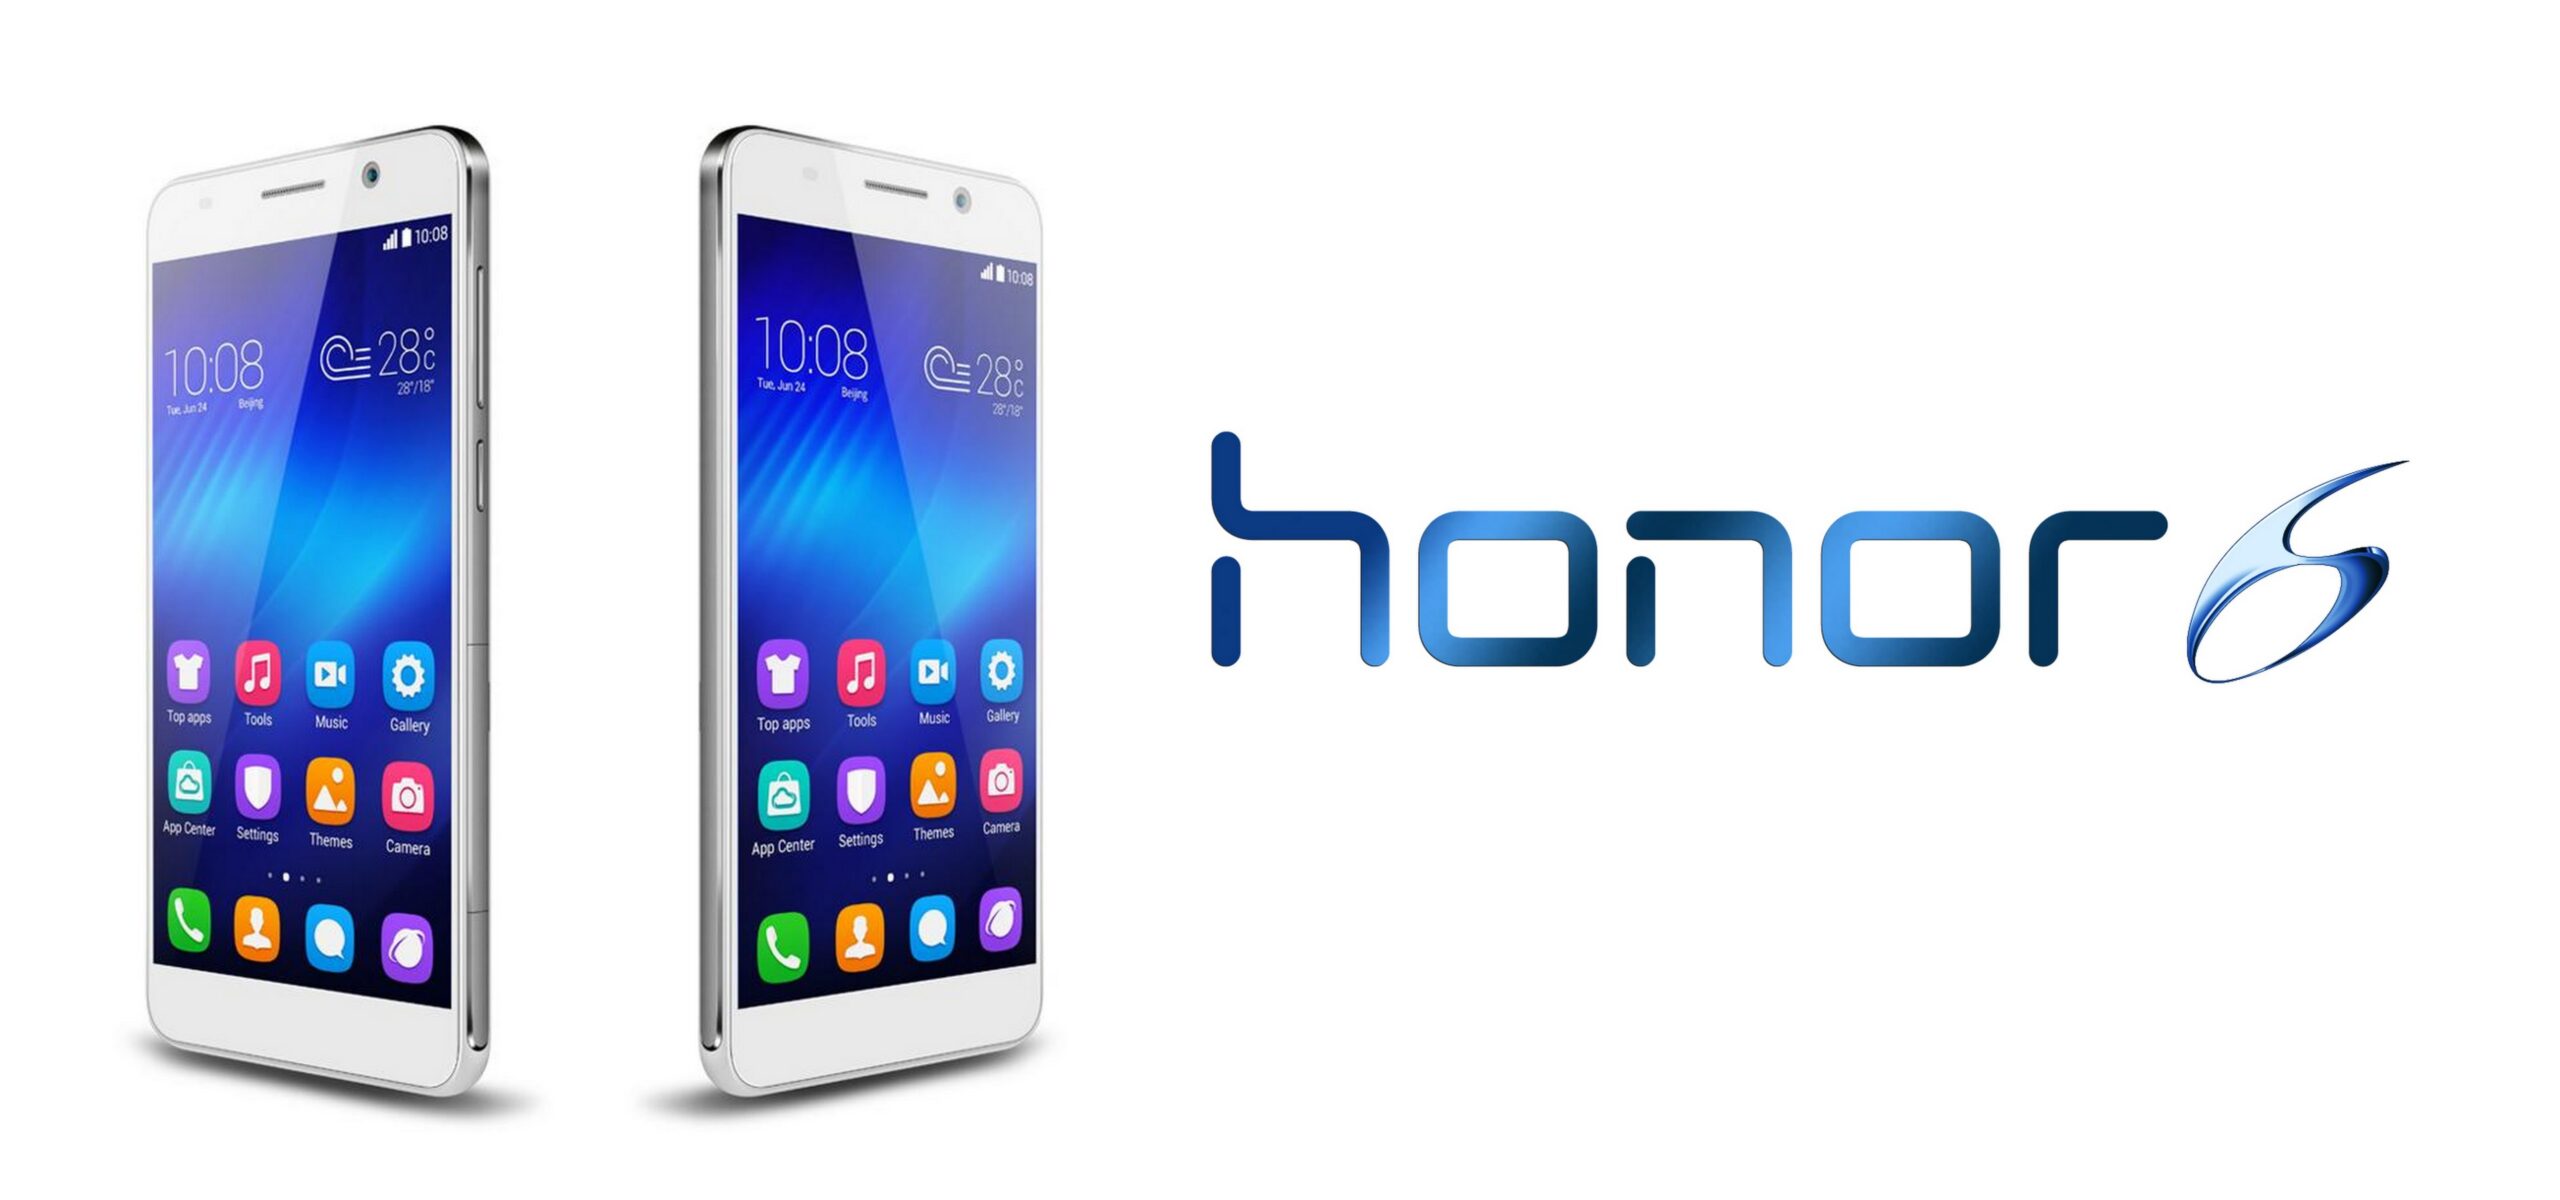 Nowa marka telefonów wkracza na polski rynek honor Mediarun Com Honor6 Smartfon scaled